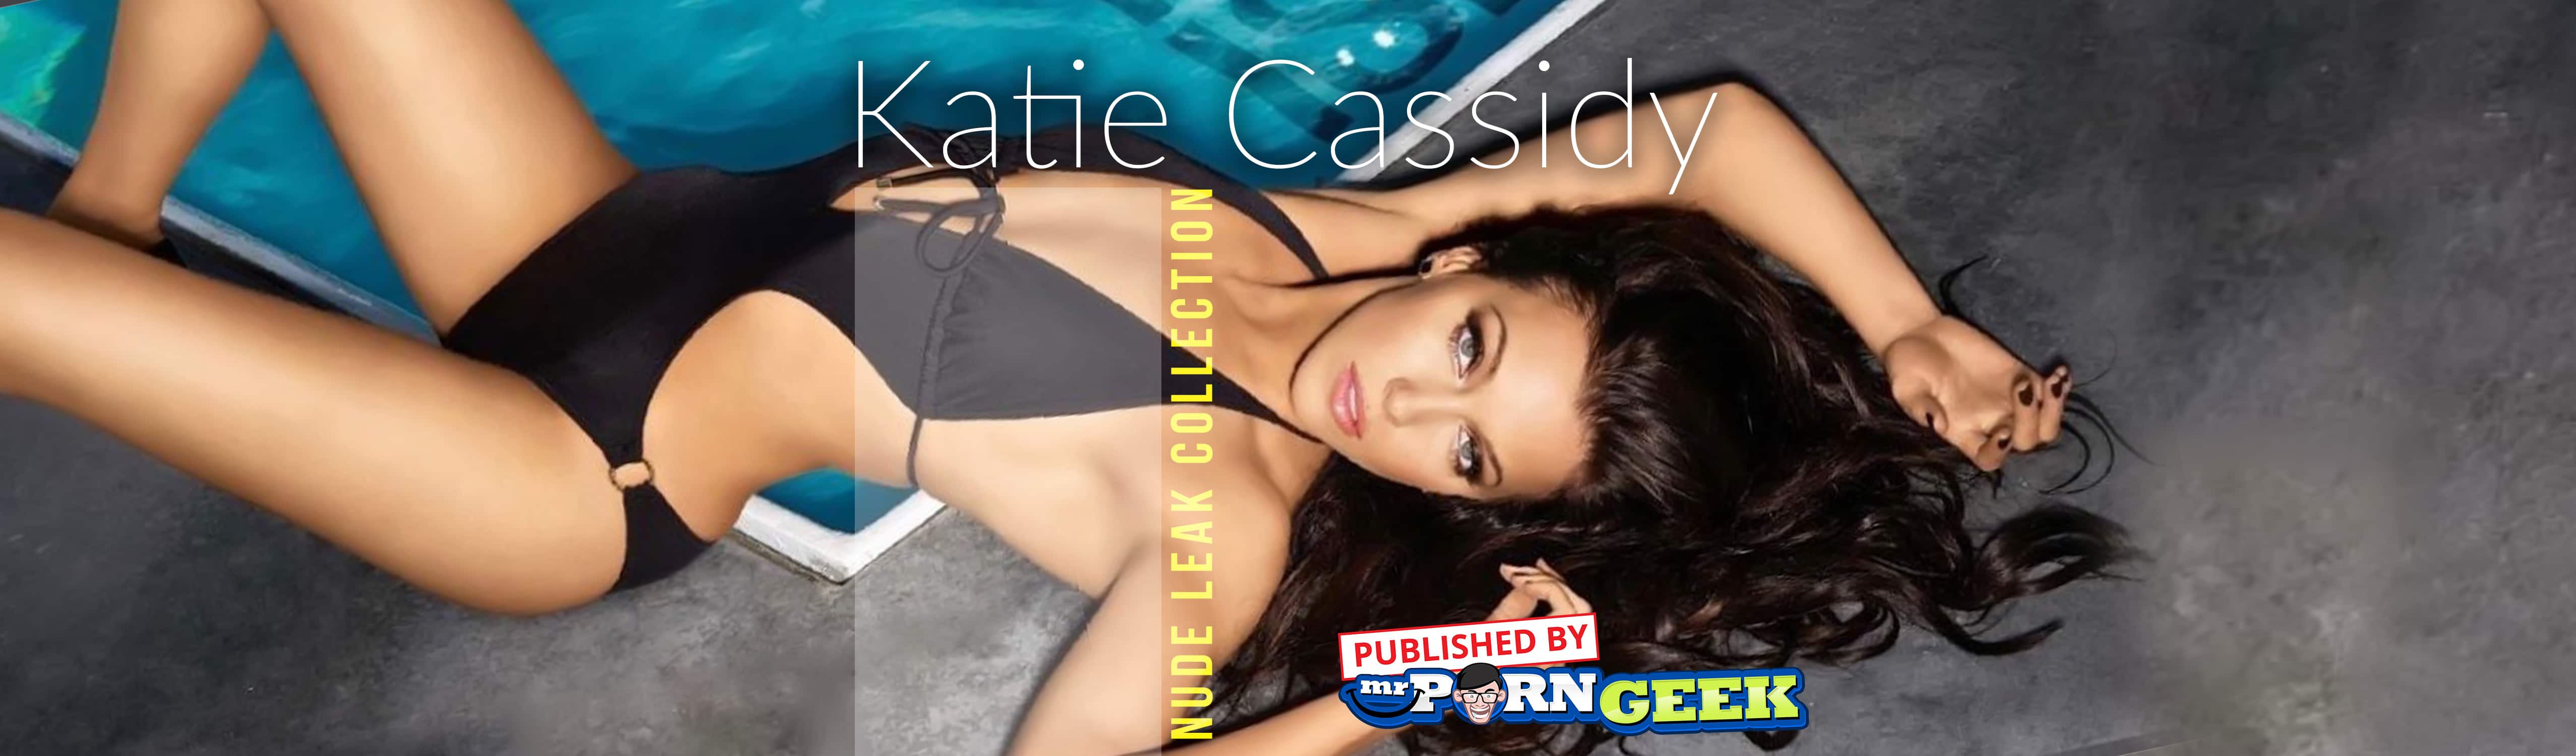 Katie cassidy nude leak